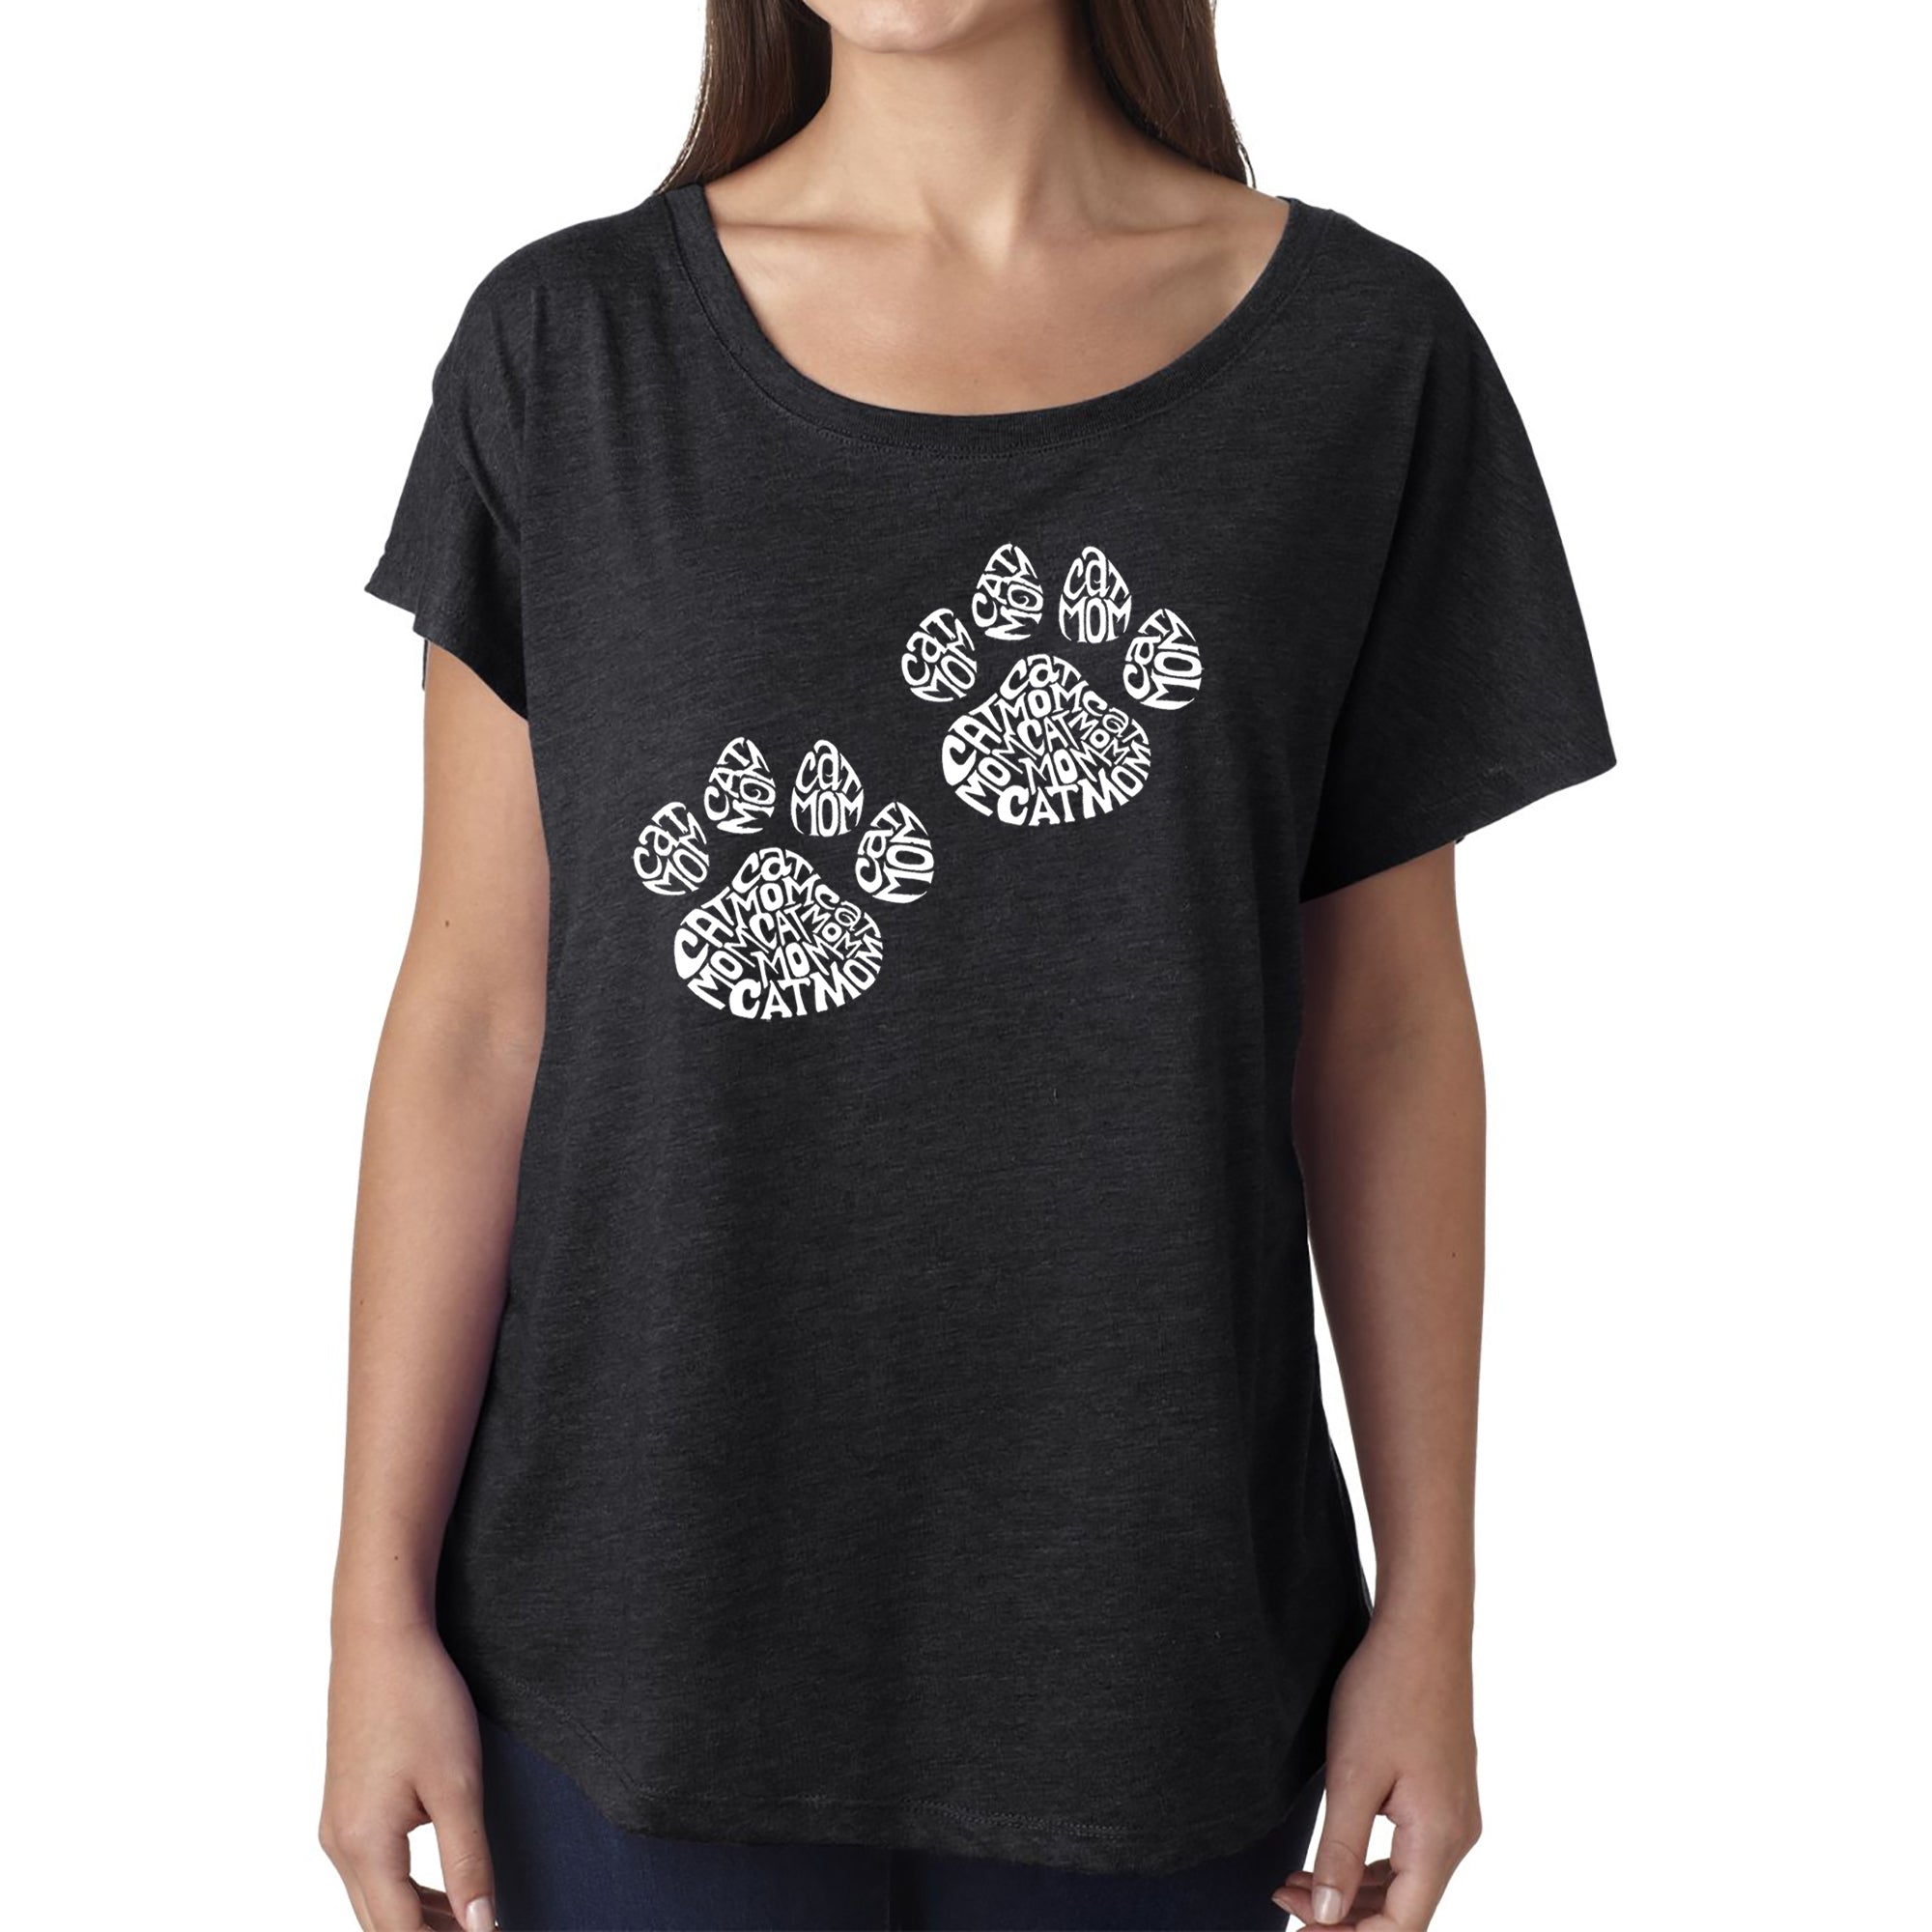 Cat Mom - Women's Loose Fit Dolman Cut Word Art Shirt - Black - XX-Large